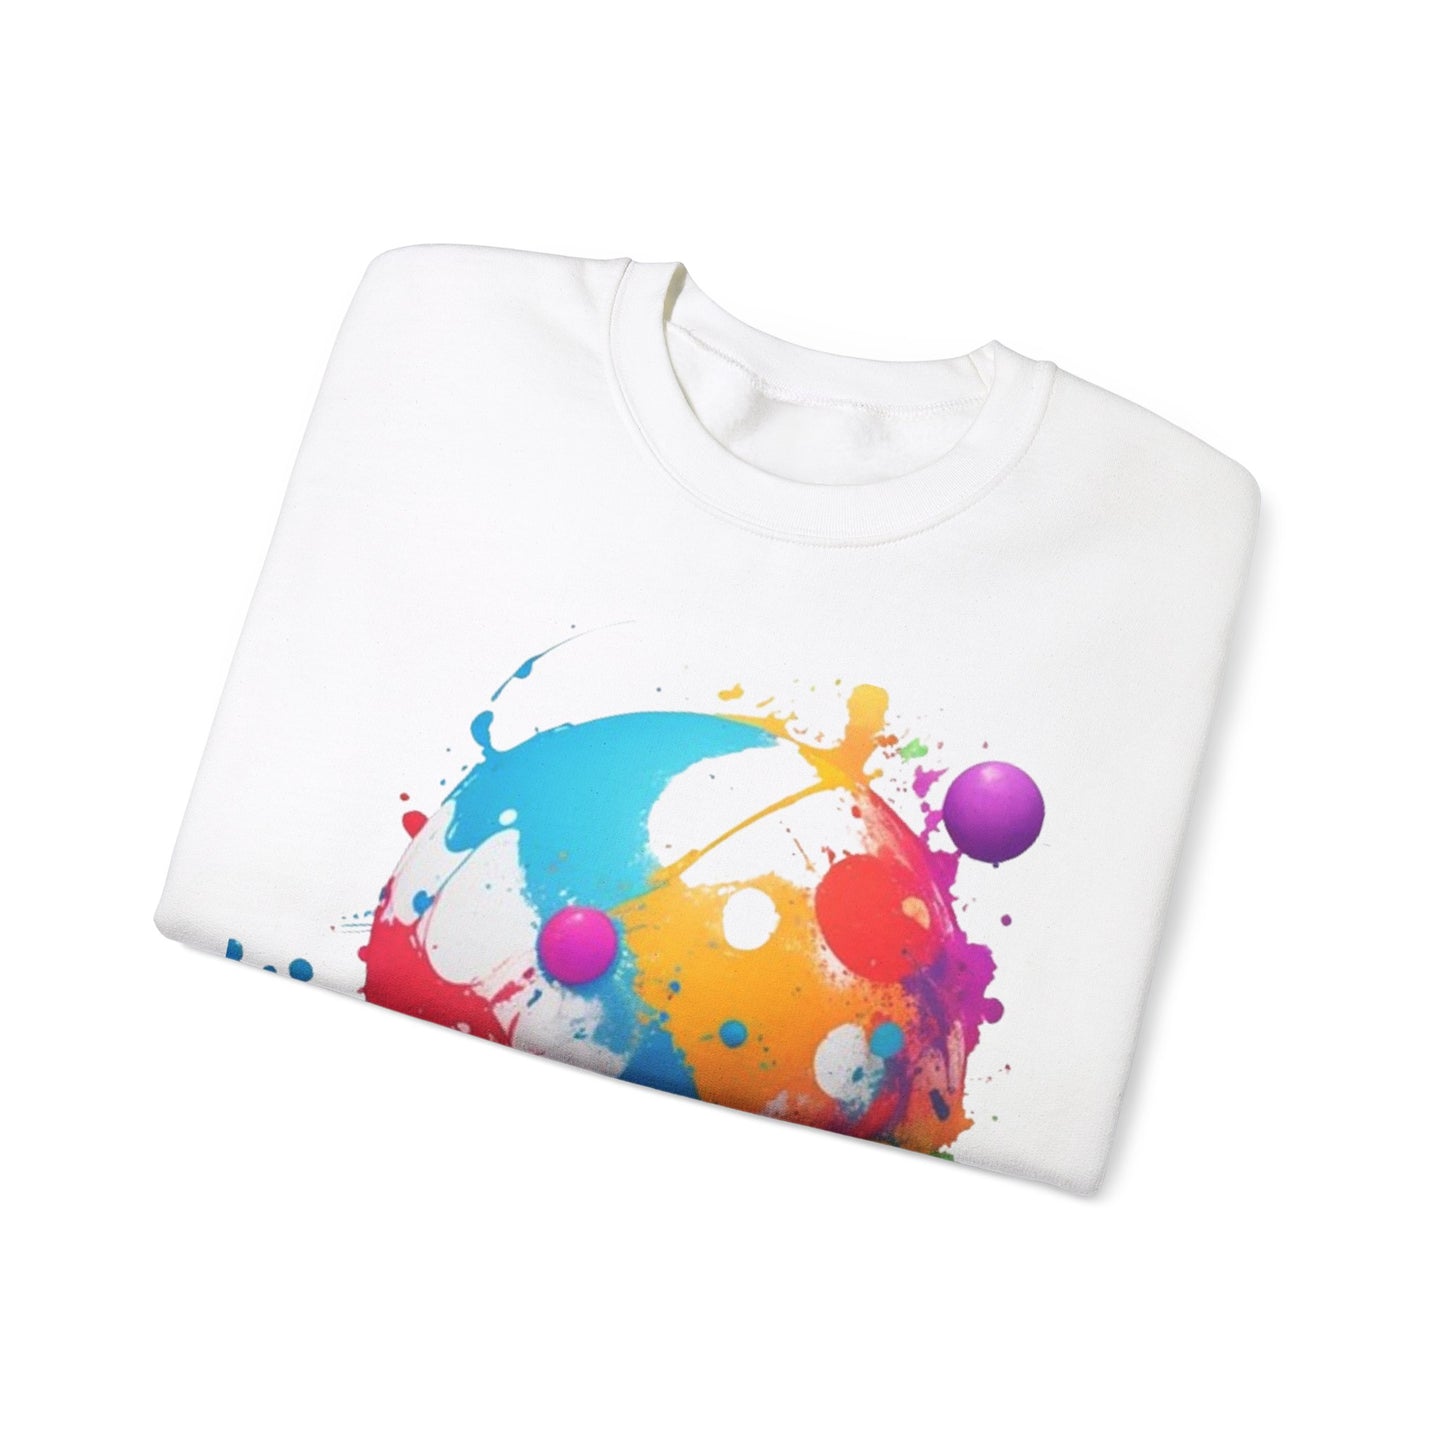 Messy Colourful Sphere Unisex Crewneck Sweatshirt